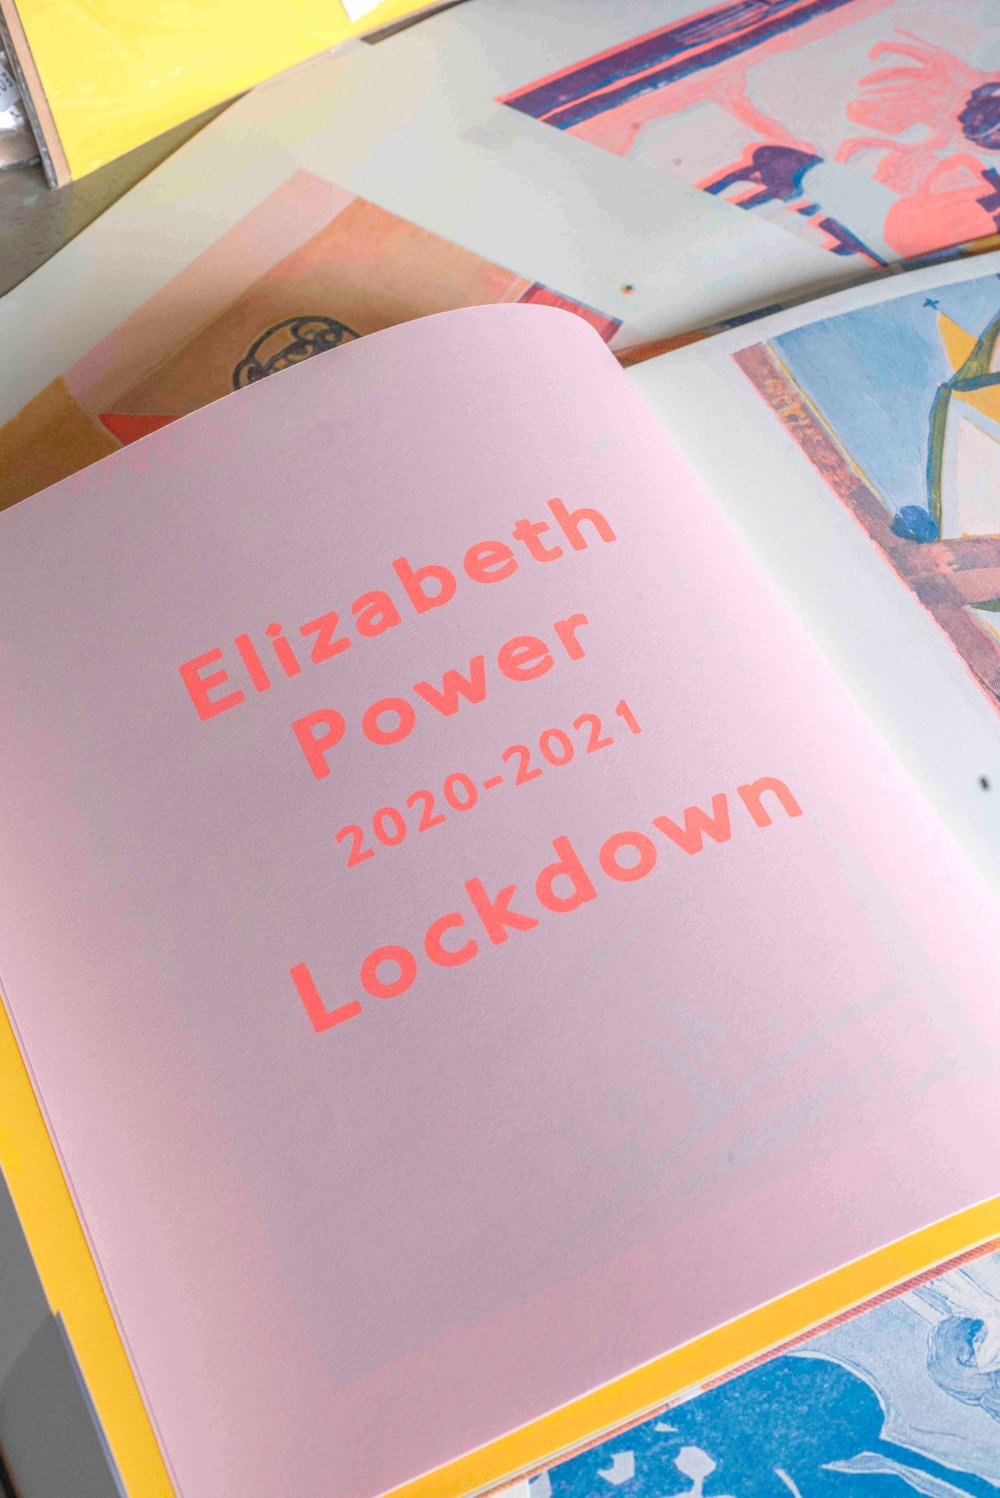 Lockdown by Elizabeth Power